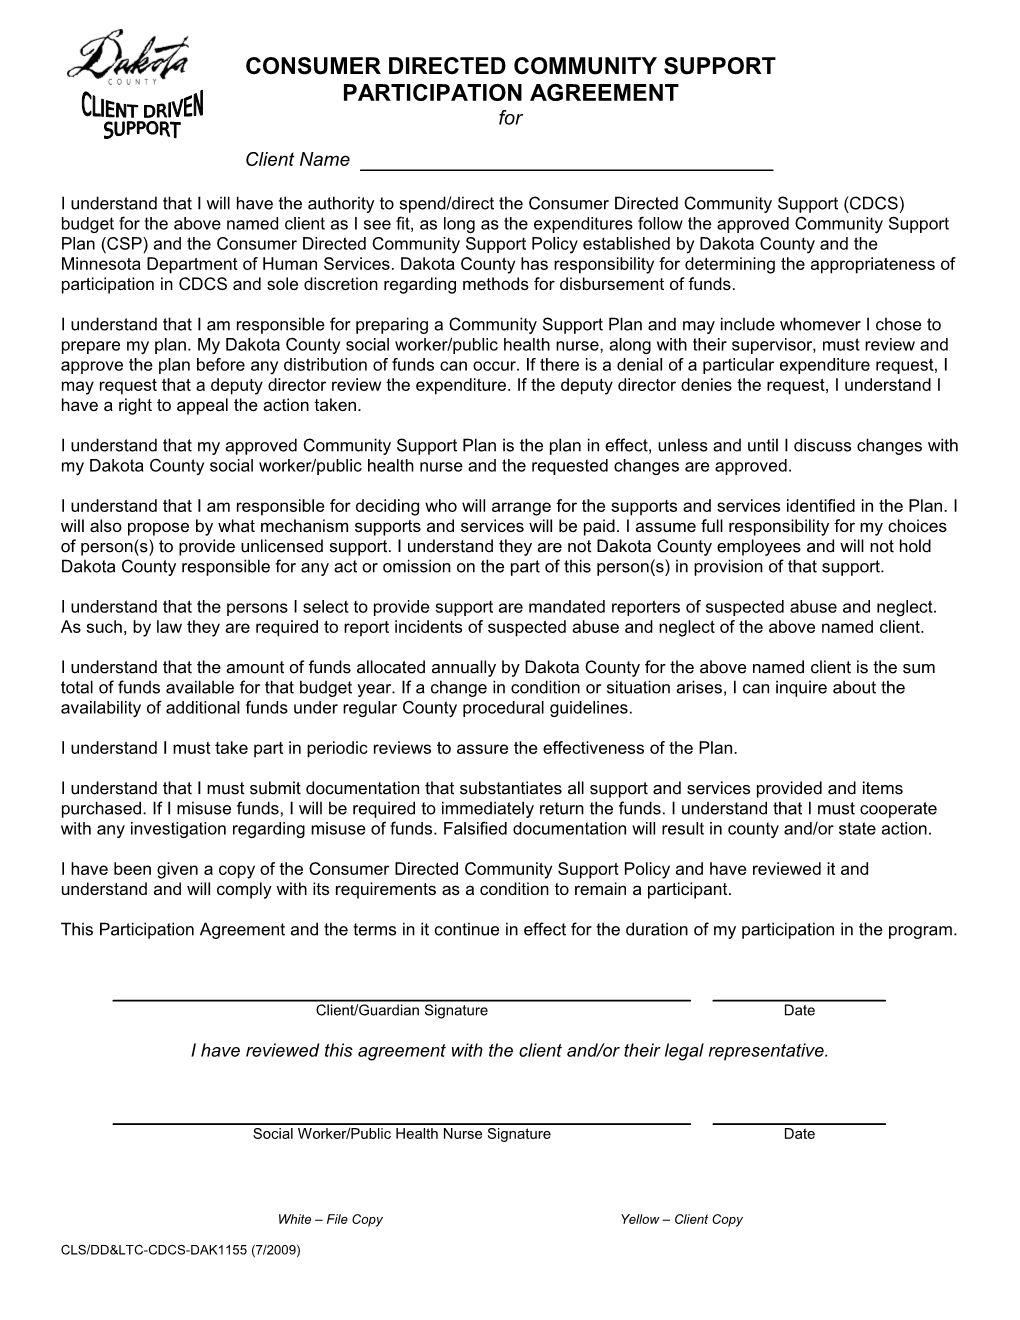 CDCS Participation Agreement